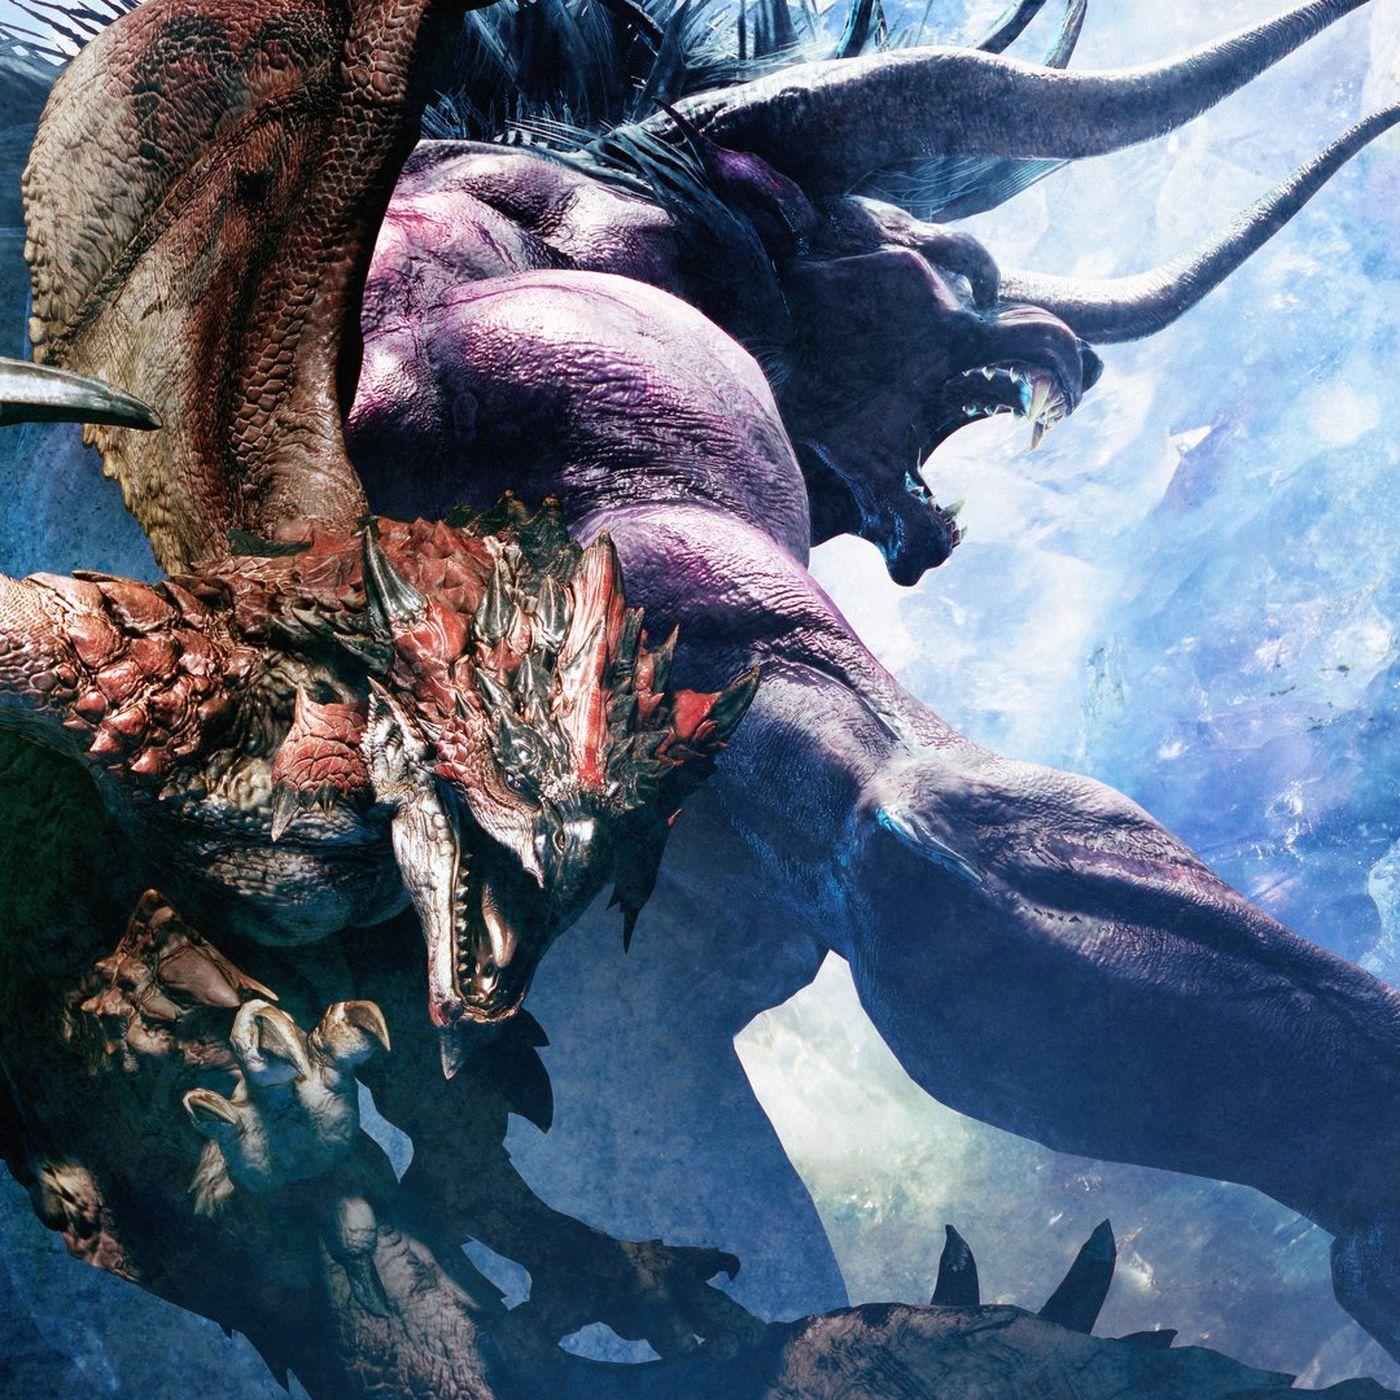 Final Fantasy 14's Behemoth invades Monster Hunter: World next month